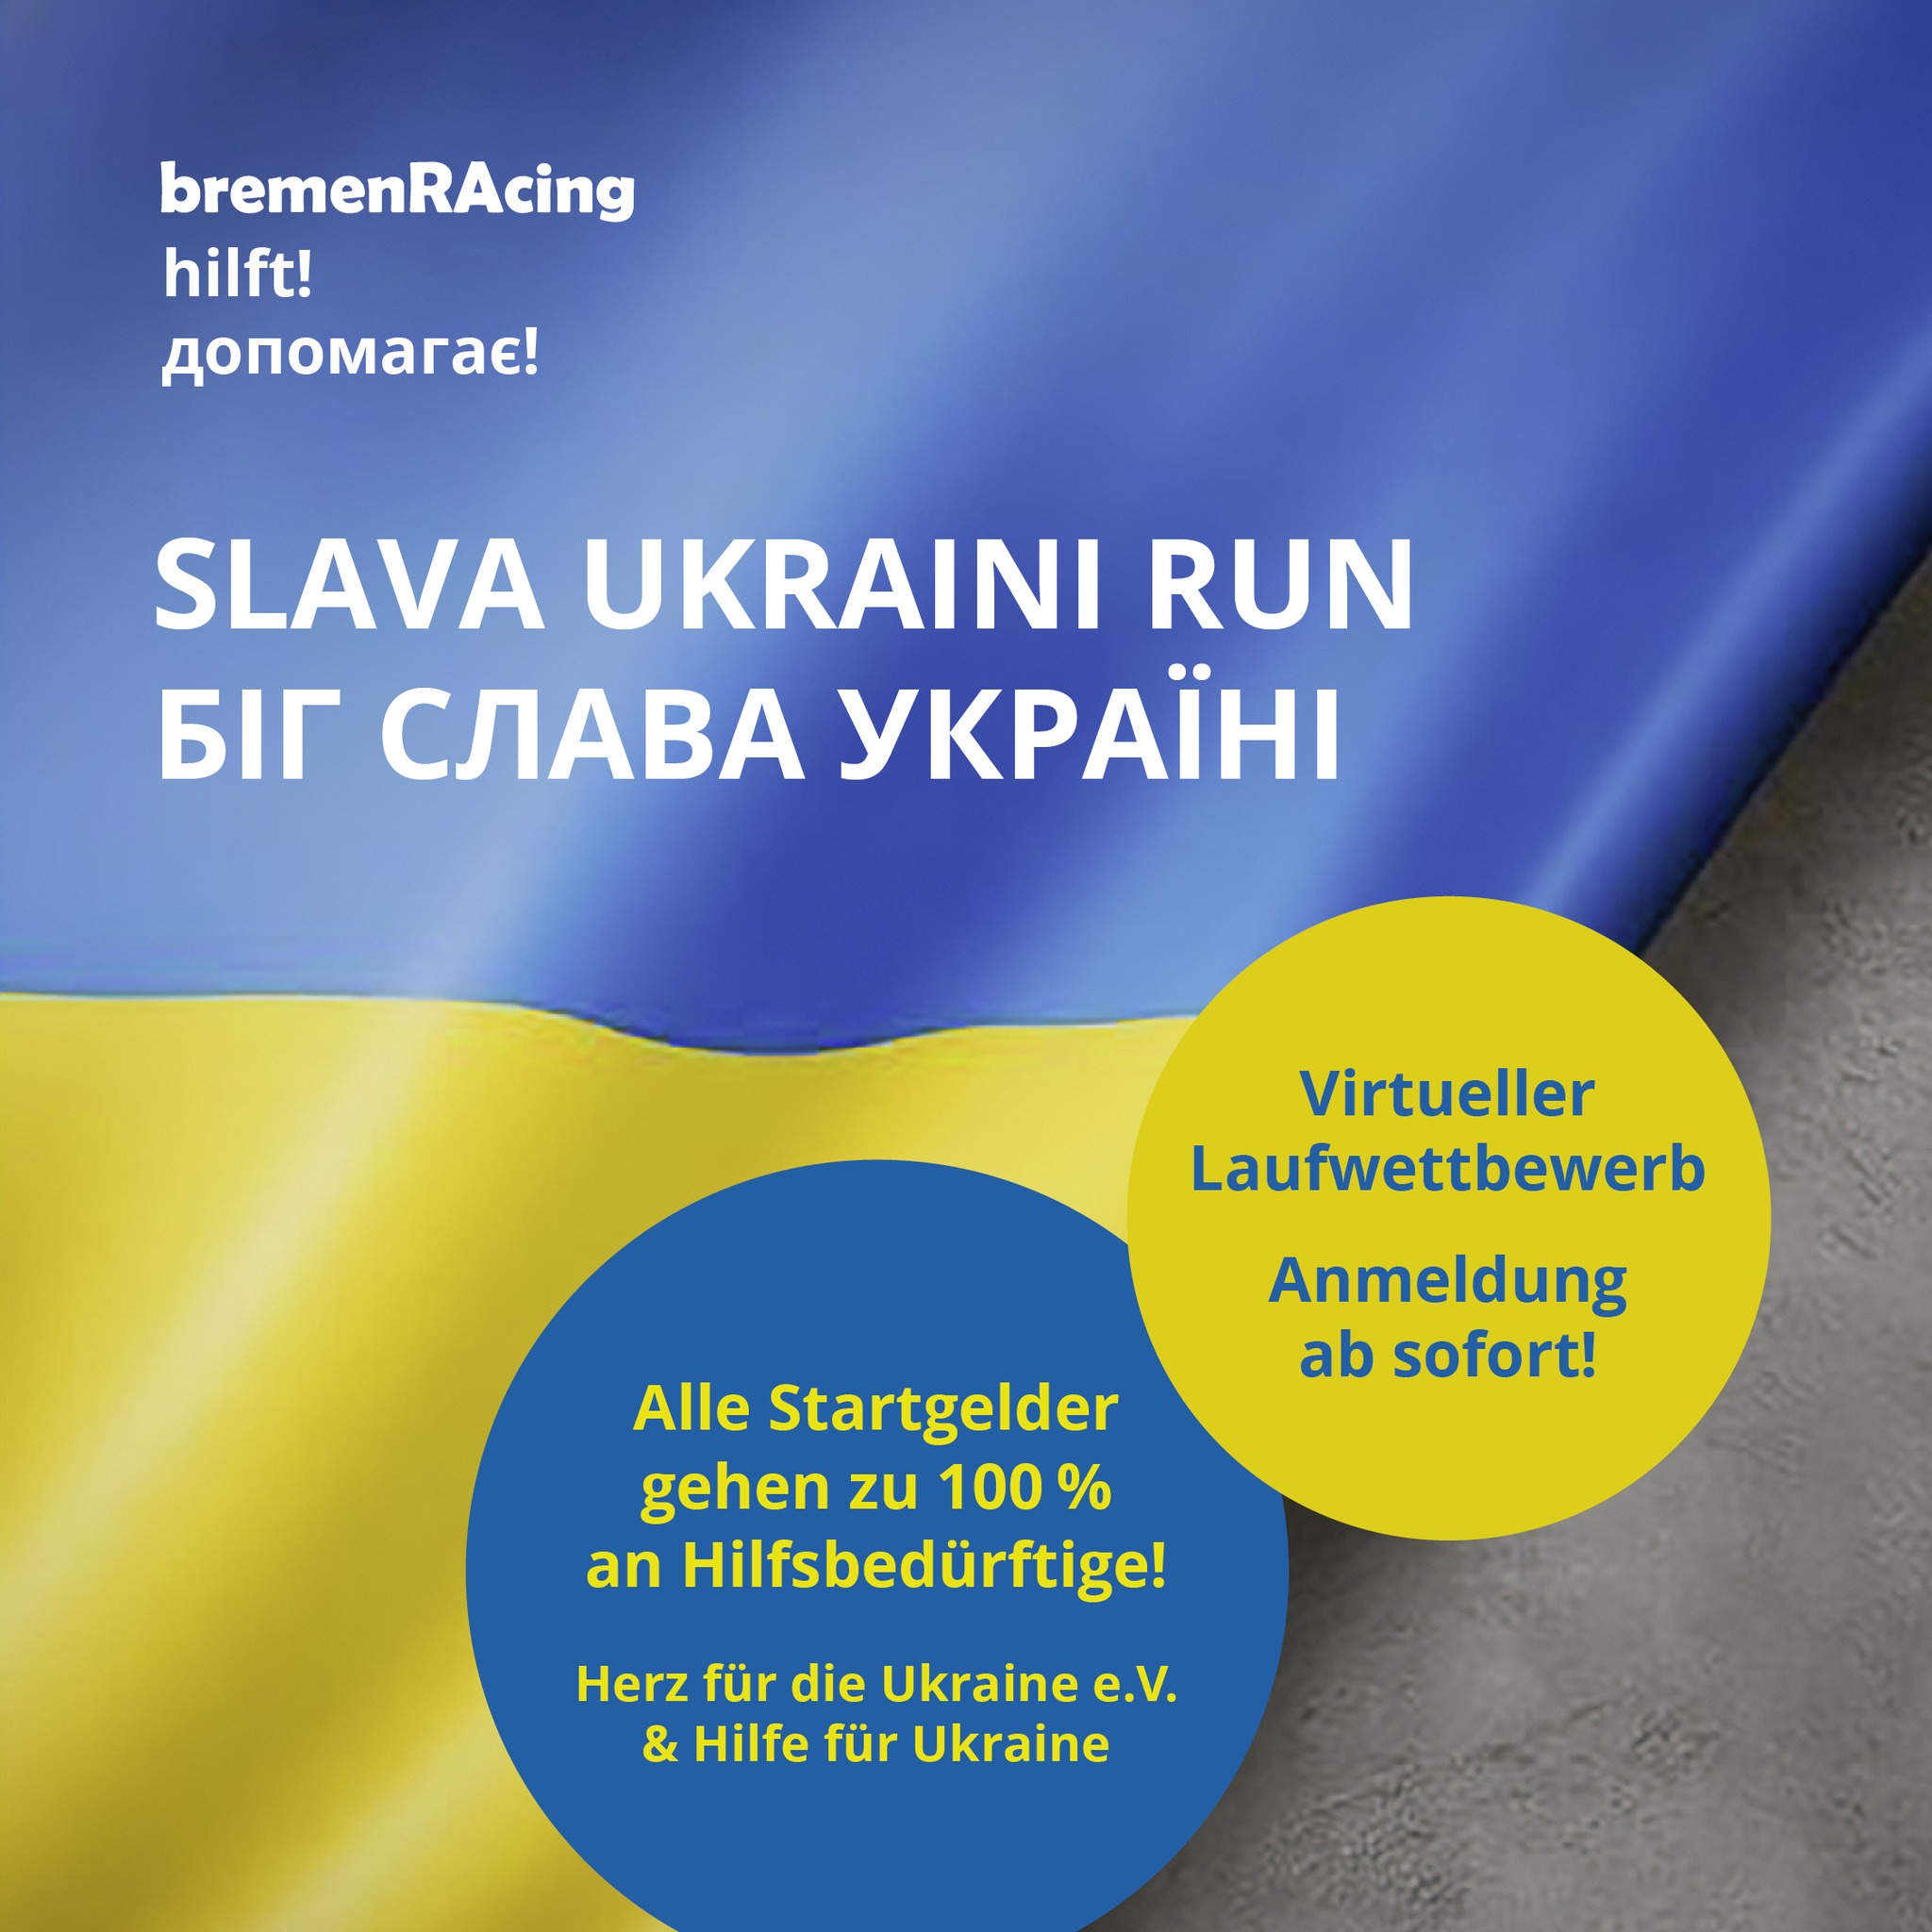 Lasst uns laufend etwas Gute tun – Der Slava Ukraini Run